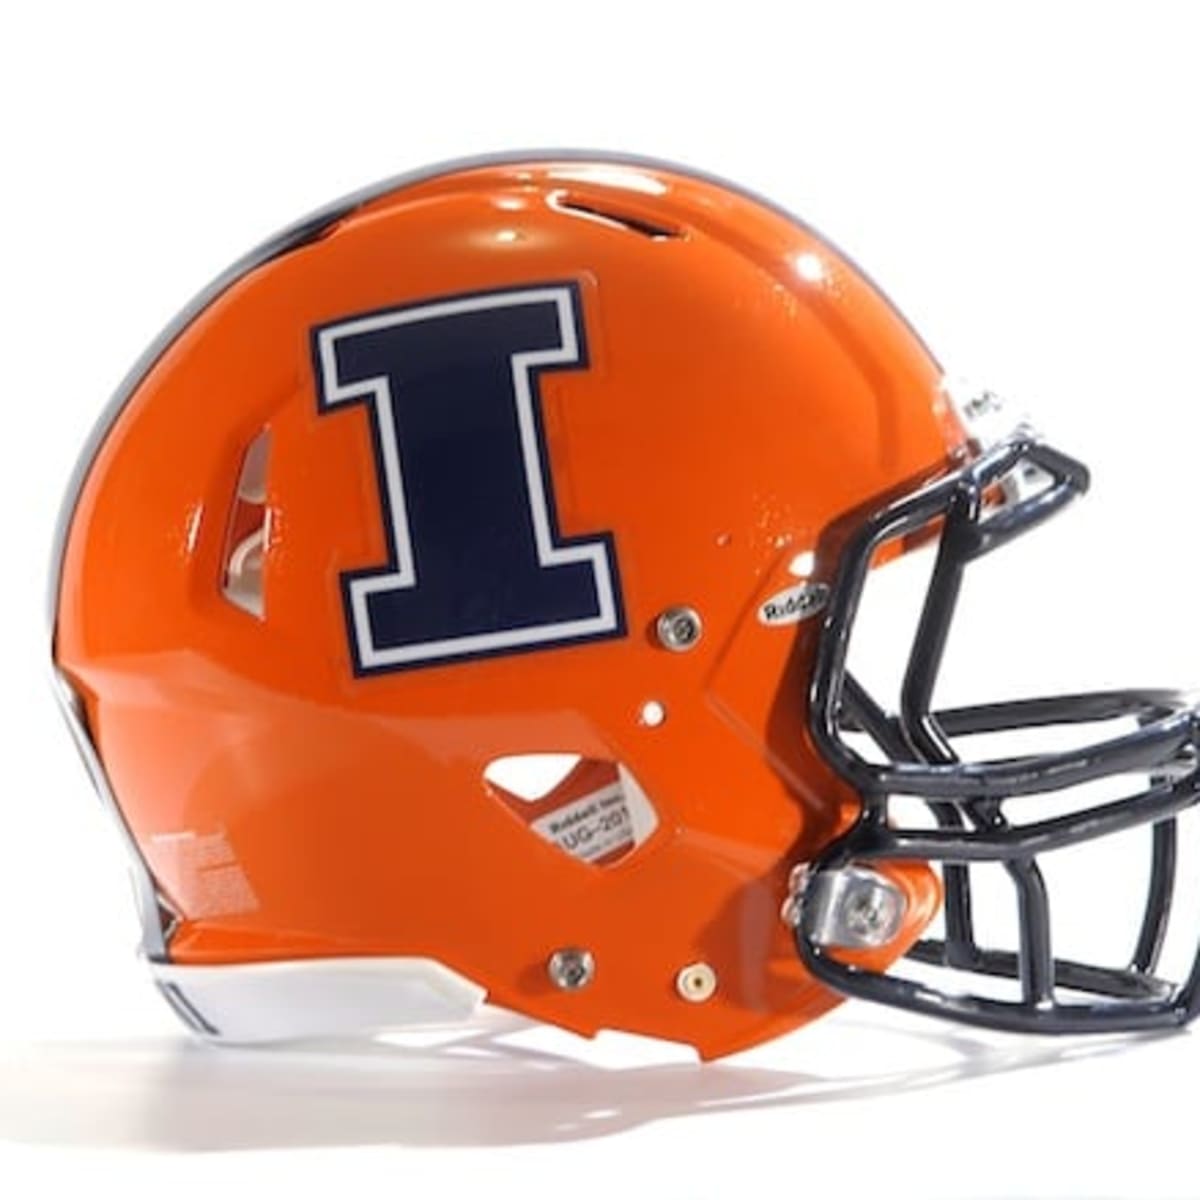 PHOTOS: New helmets for Illinois 